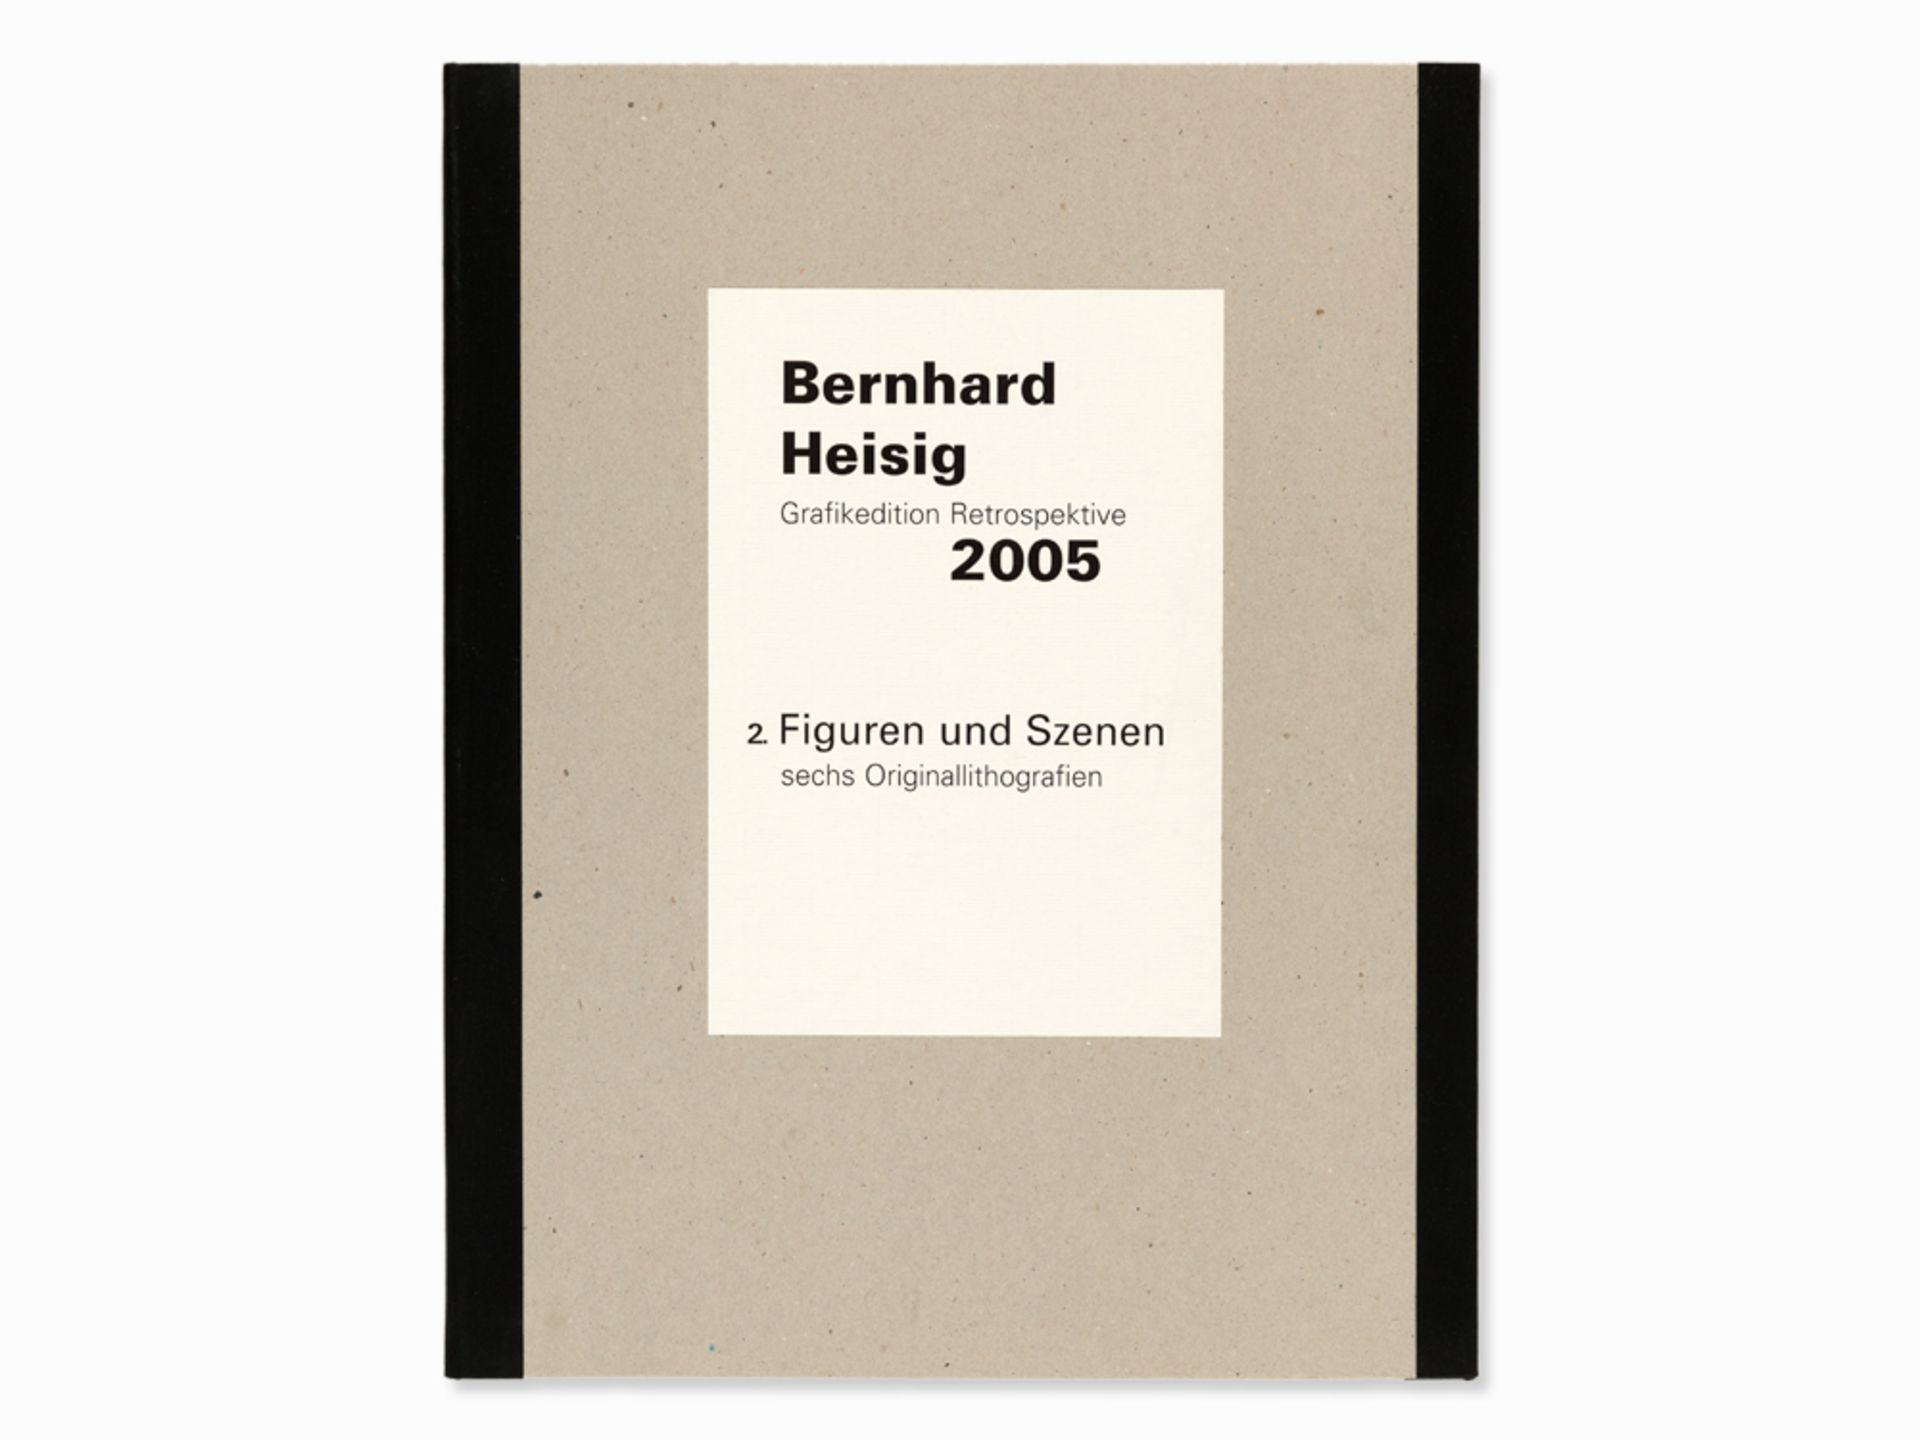 Bernhard Heisig, Grafikedition Retrospektive, Portfolio, 2005 - Image 9 of 10